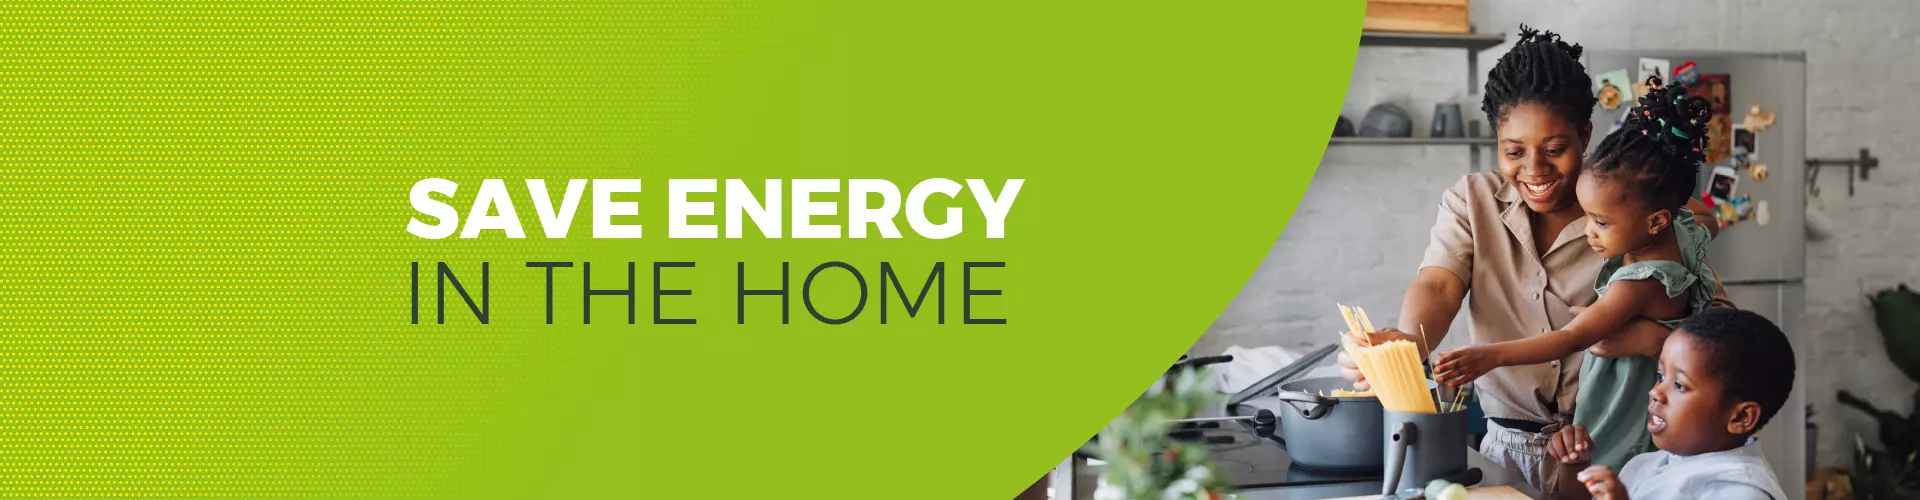 energy-saving-new-Homepage-hero-banner.jpg